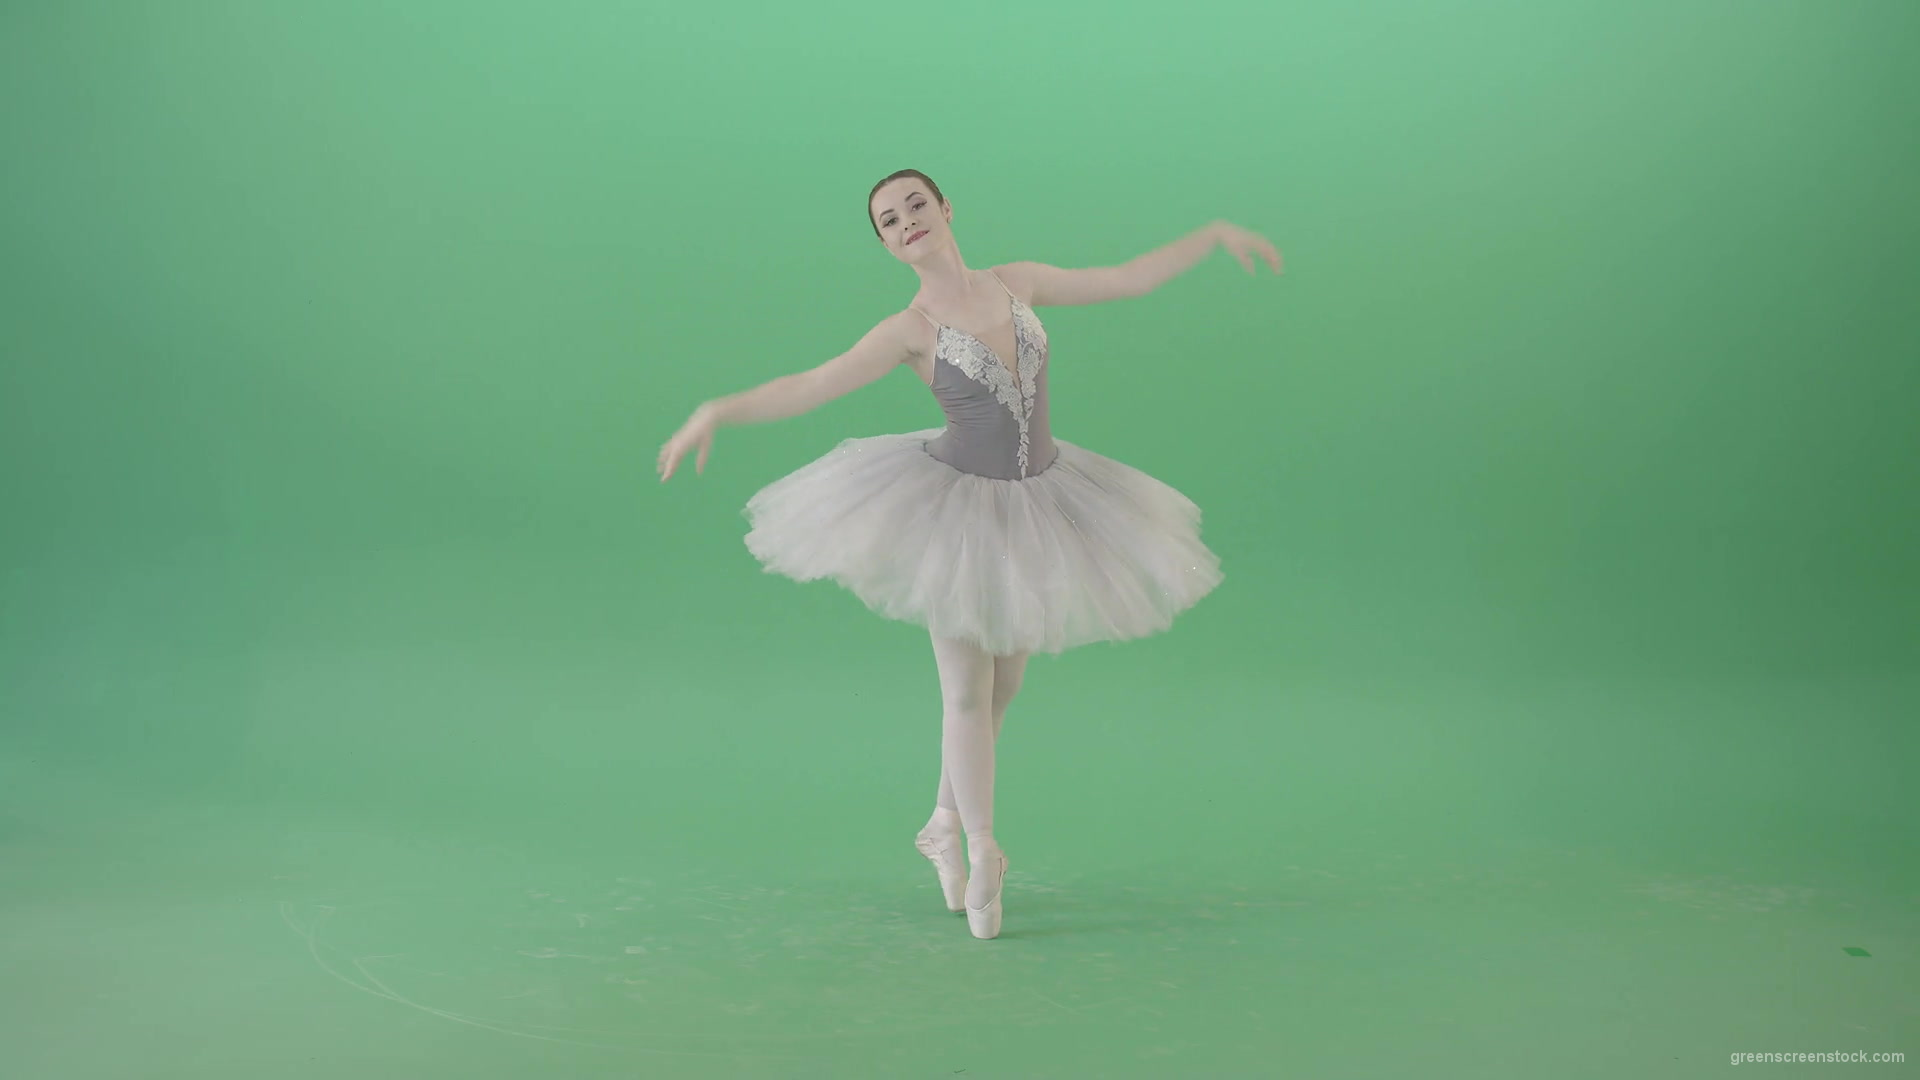 Ballerina-waving-hands-and-dance-on-green-screen-4K-Video-Footage-1920_008 Green Screen Stock